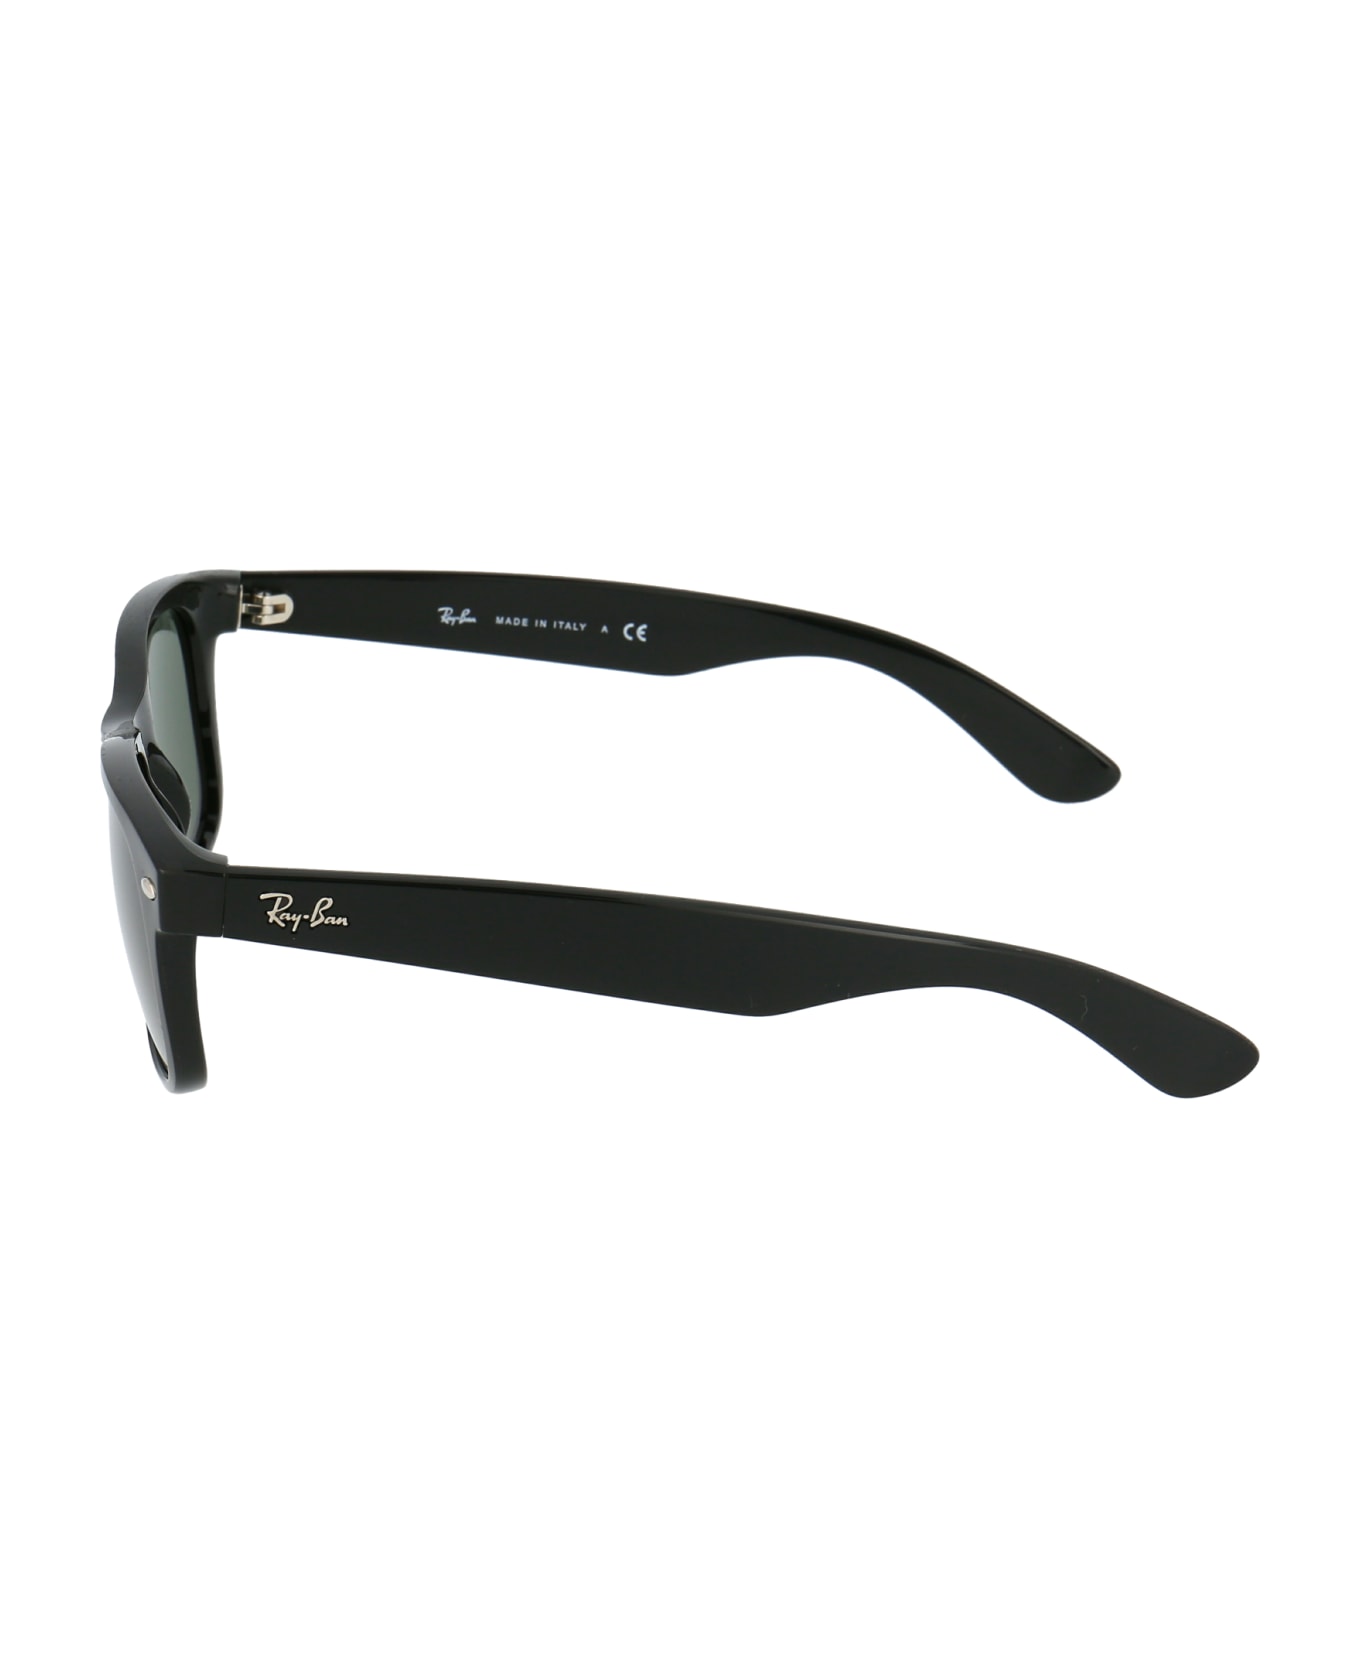 Ray-Ban New Wayfarer Sunglasses - 901L BLACK